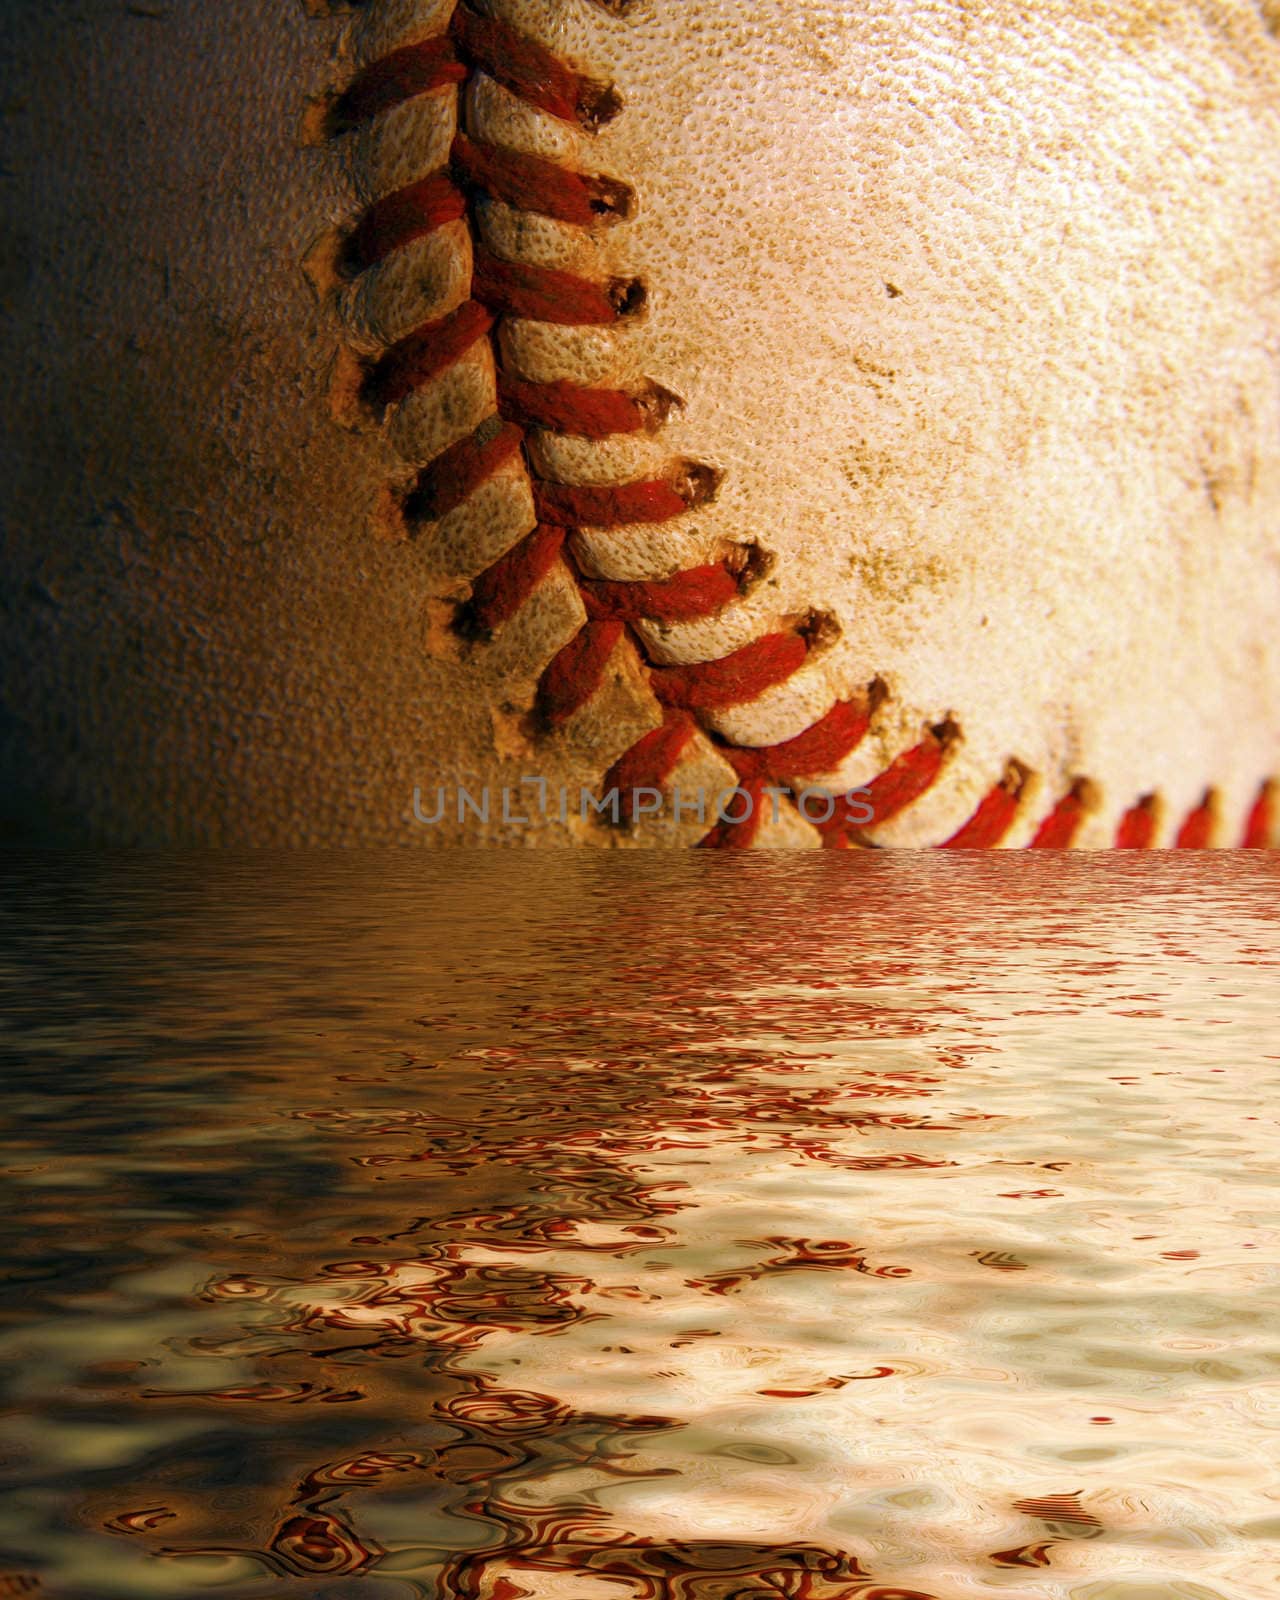 Baseball reflected